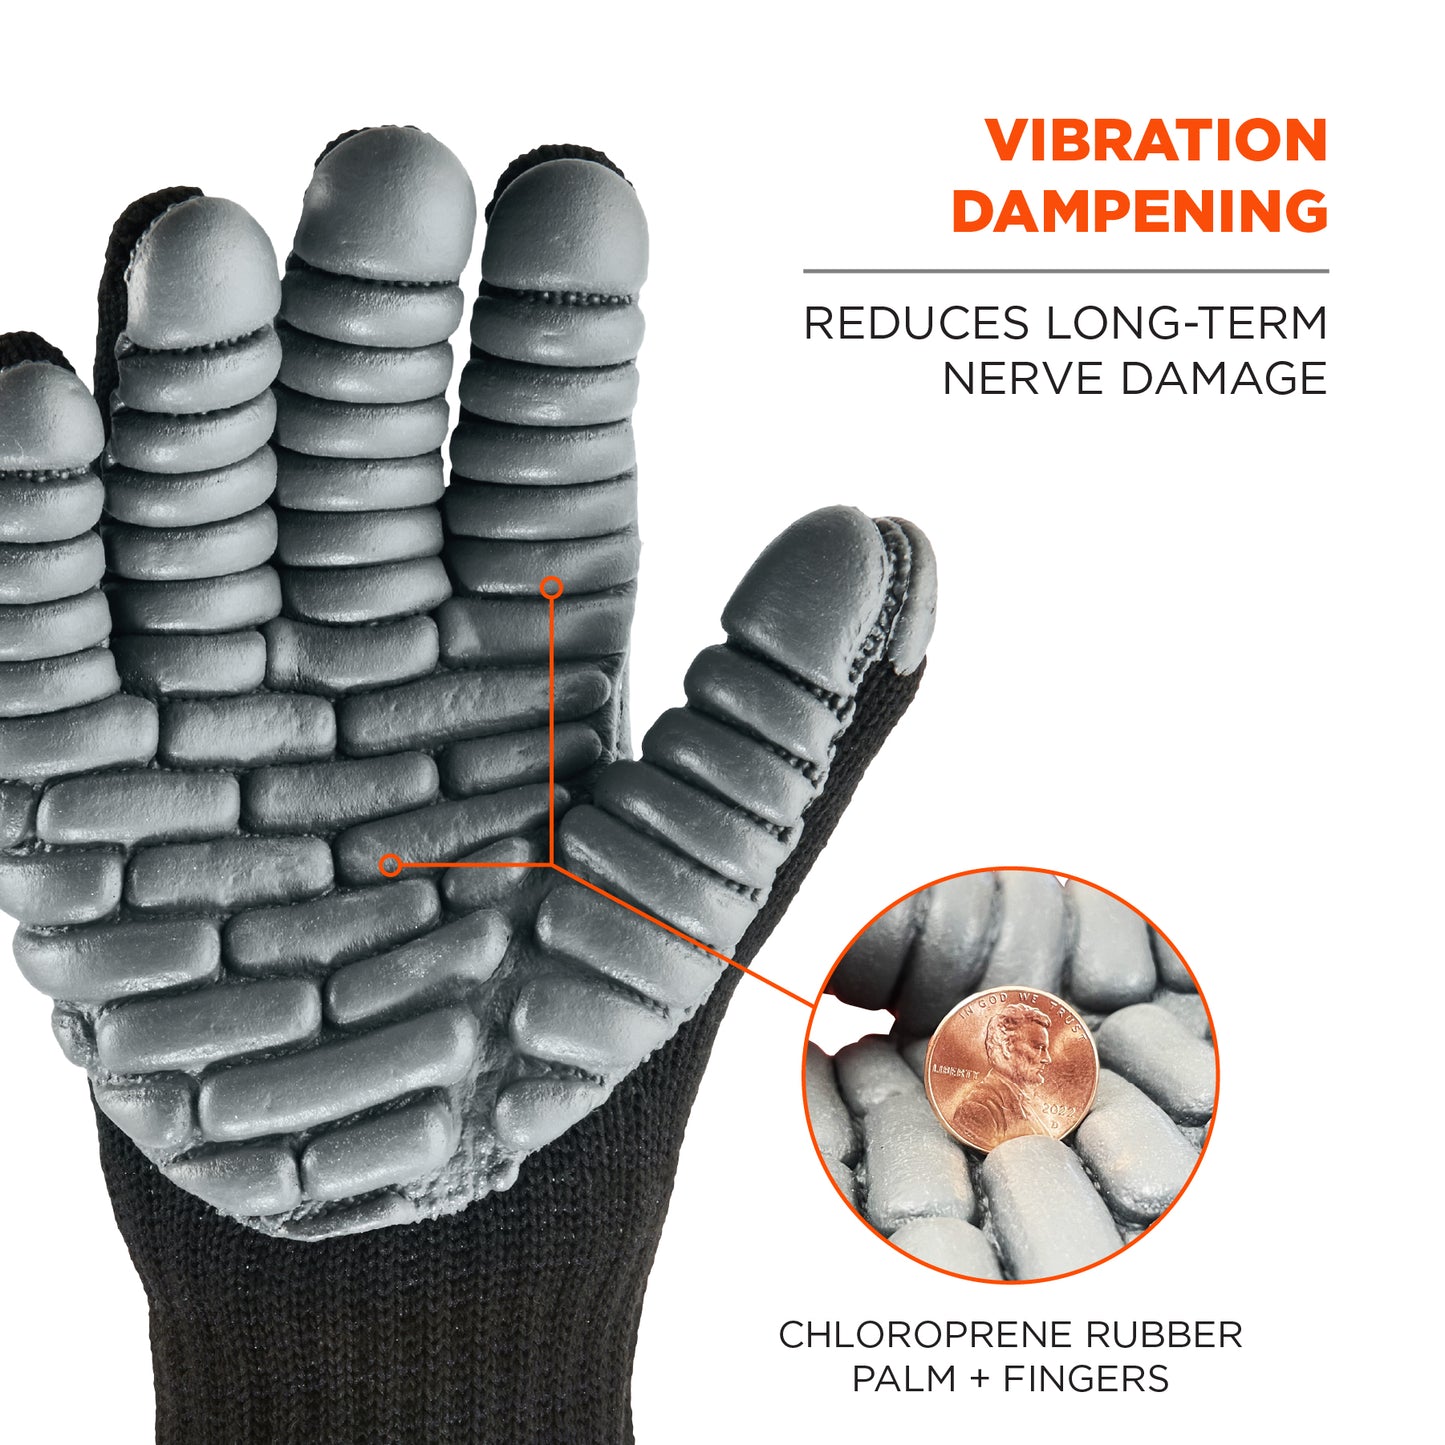 Ergodyne ProFlex 9000 Lightweight Anti-Vibration Size Large Gloves - New Surplus